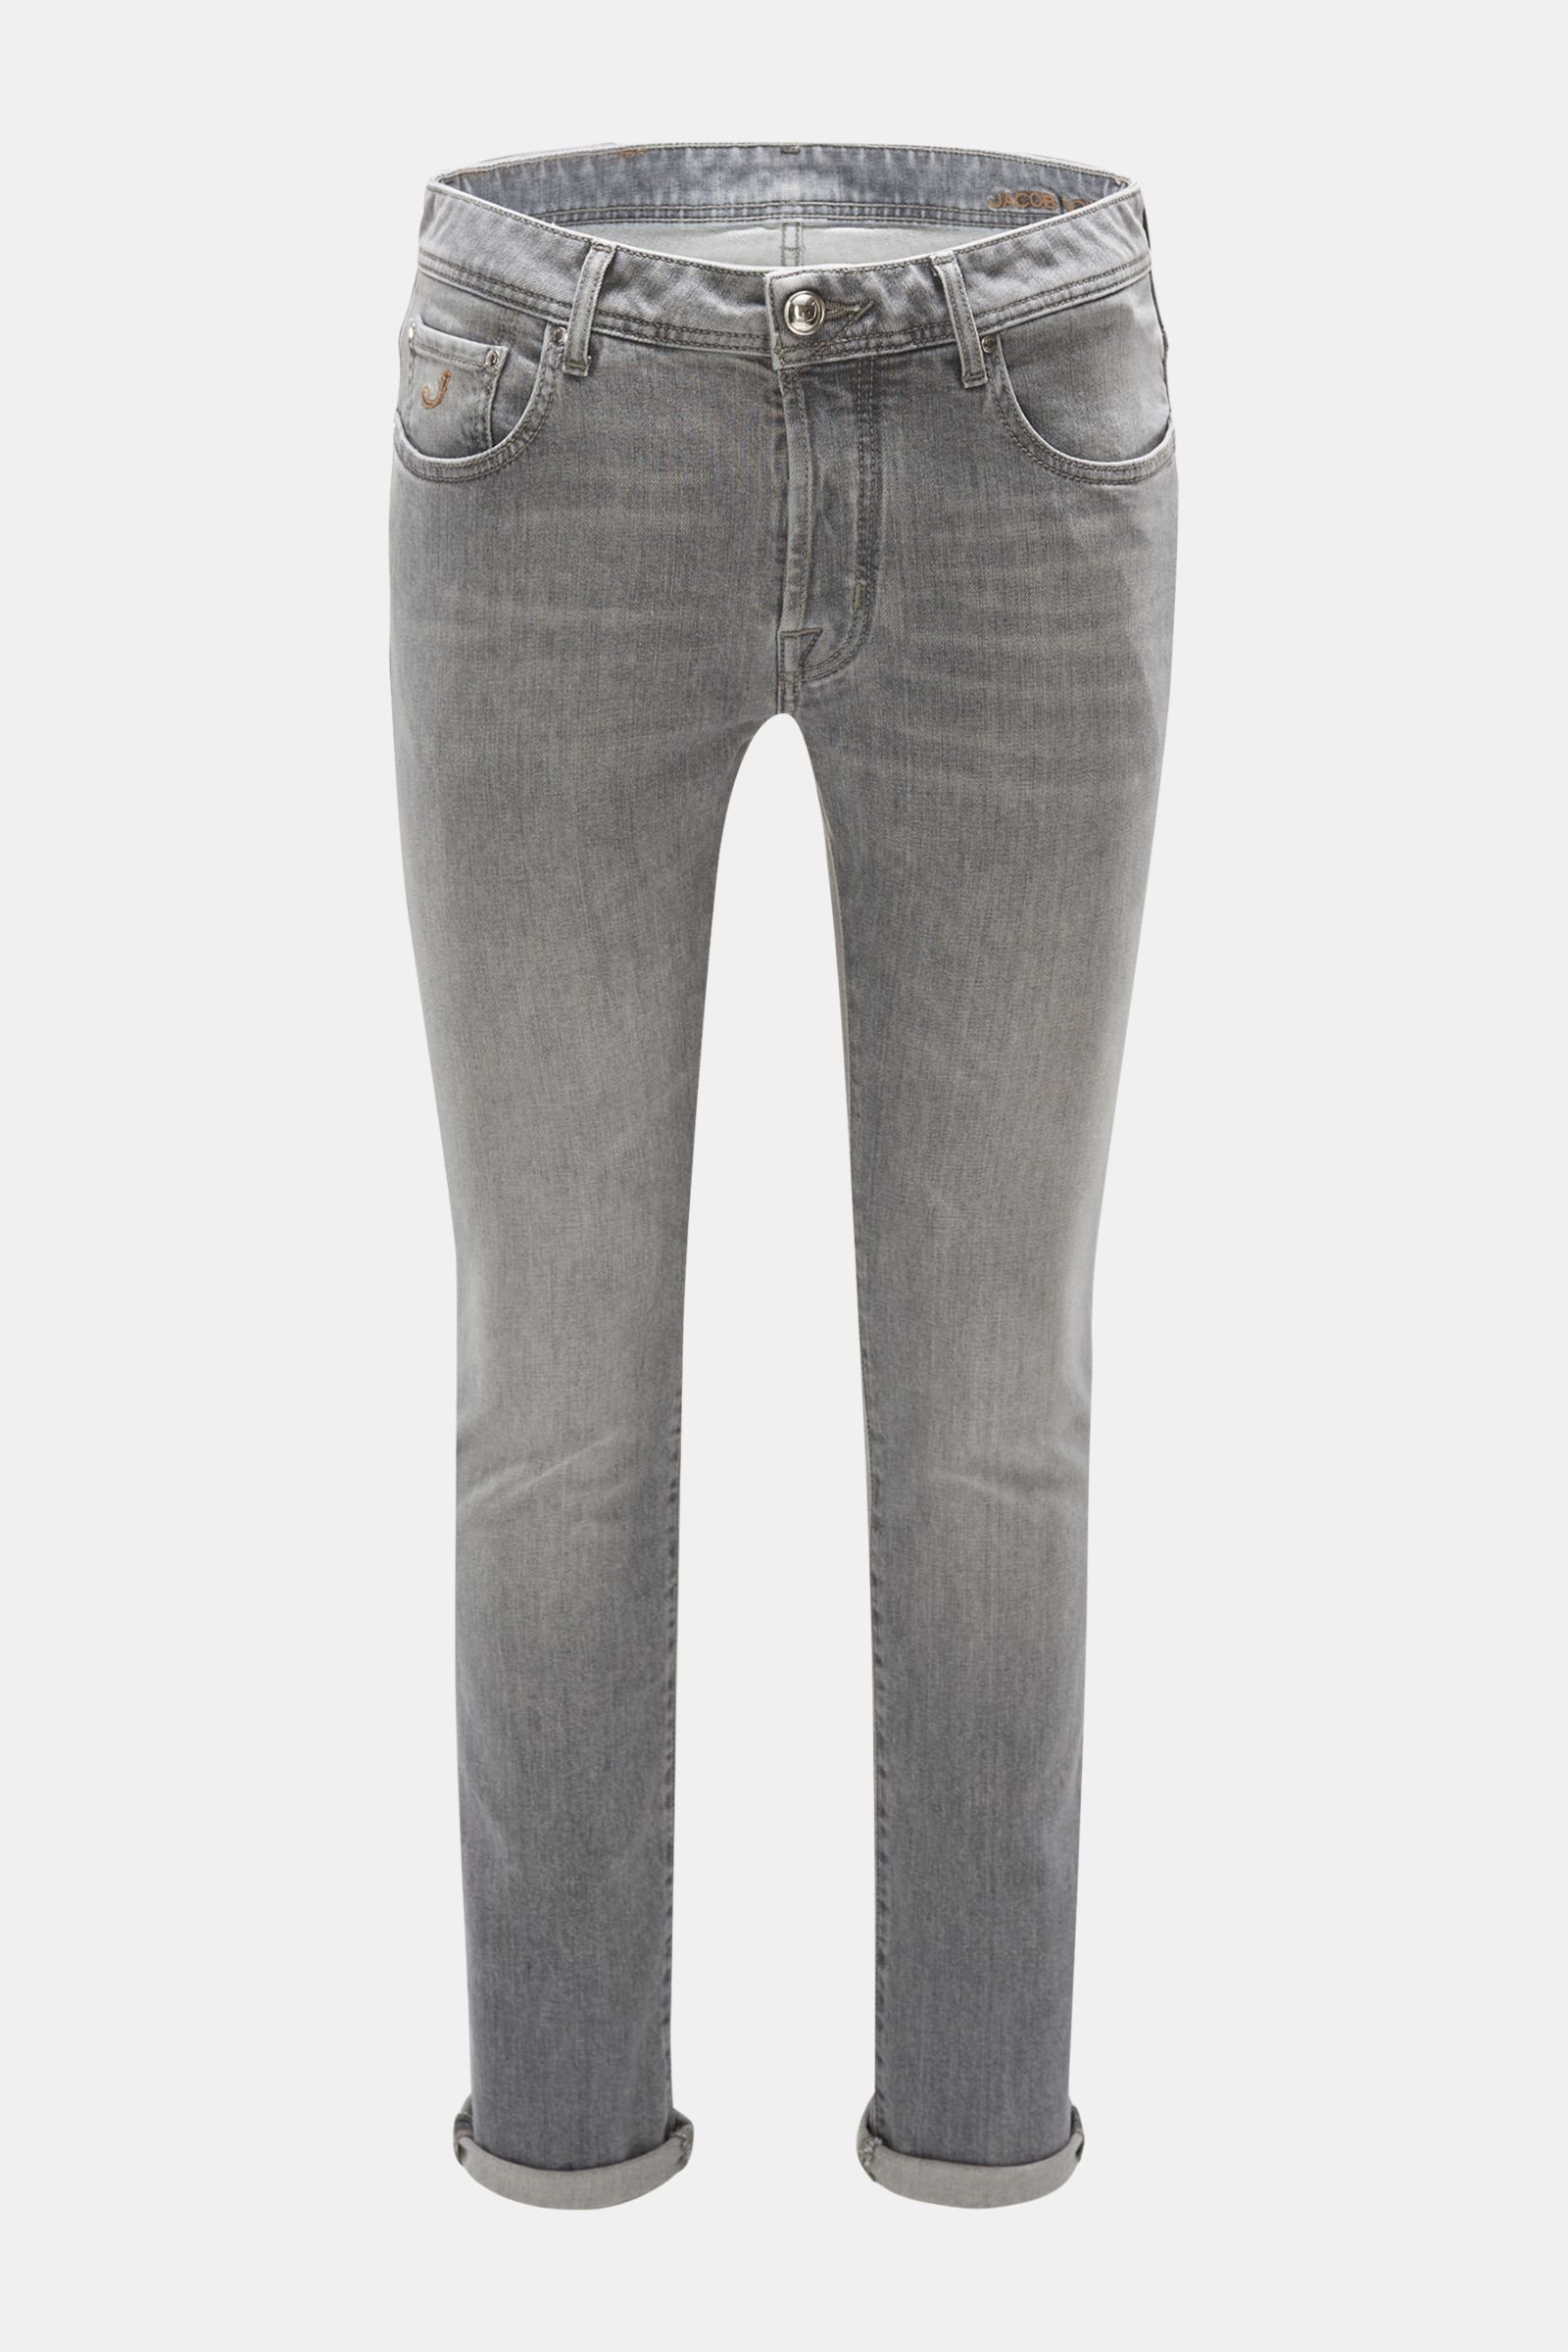 Jeans 'J688 Comfort Extra Slim Fit' light grey